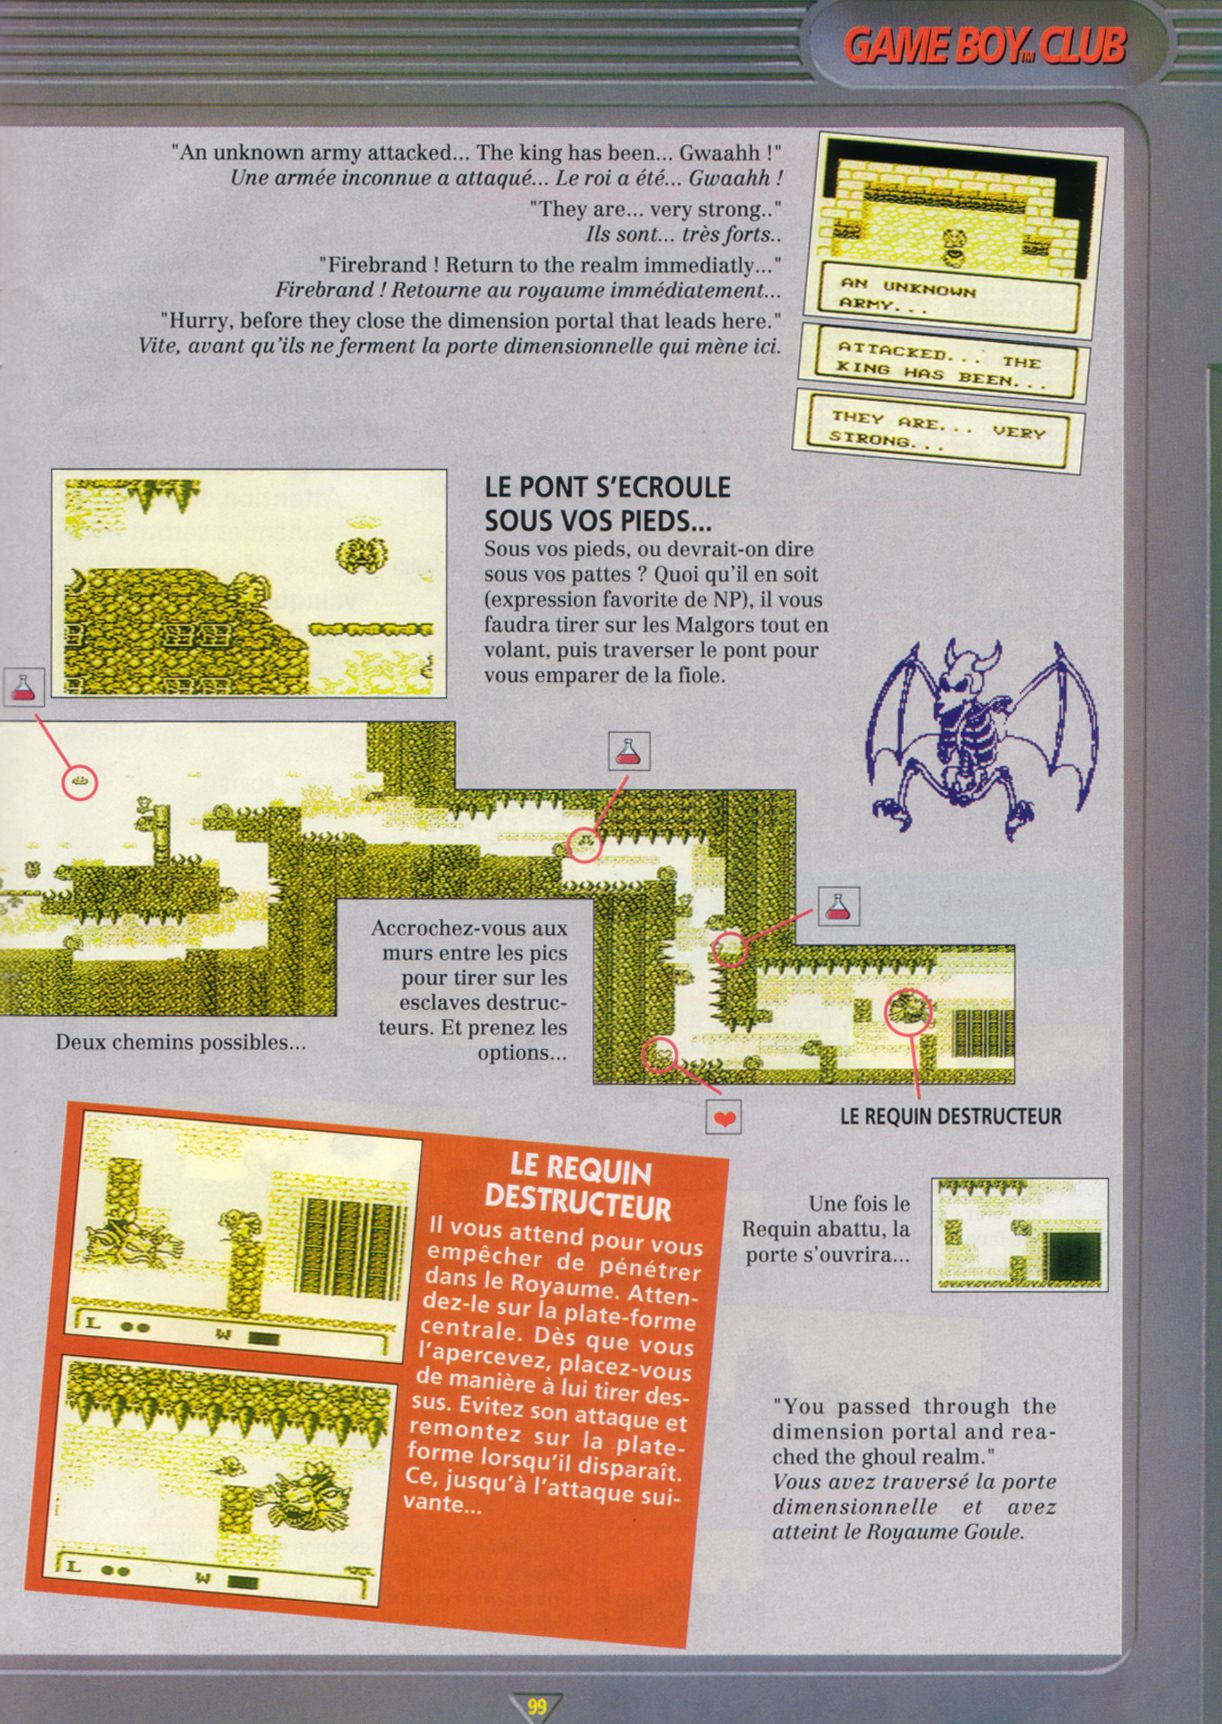 tests//1155/Nintendo Player 004 - Page 099 (1992-05-06).jpg